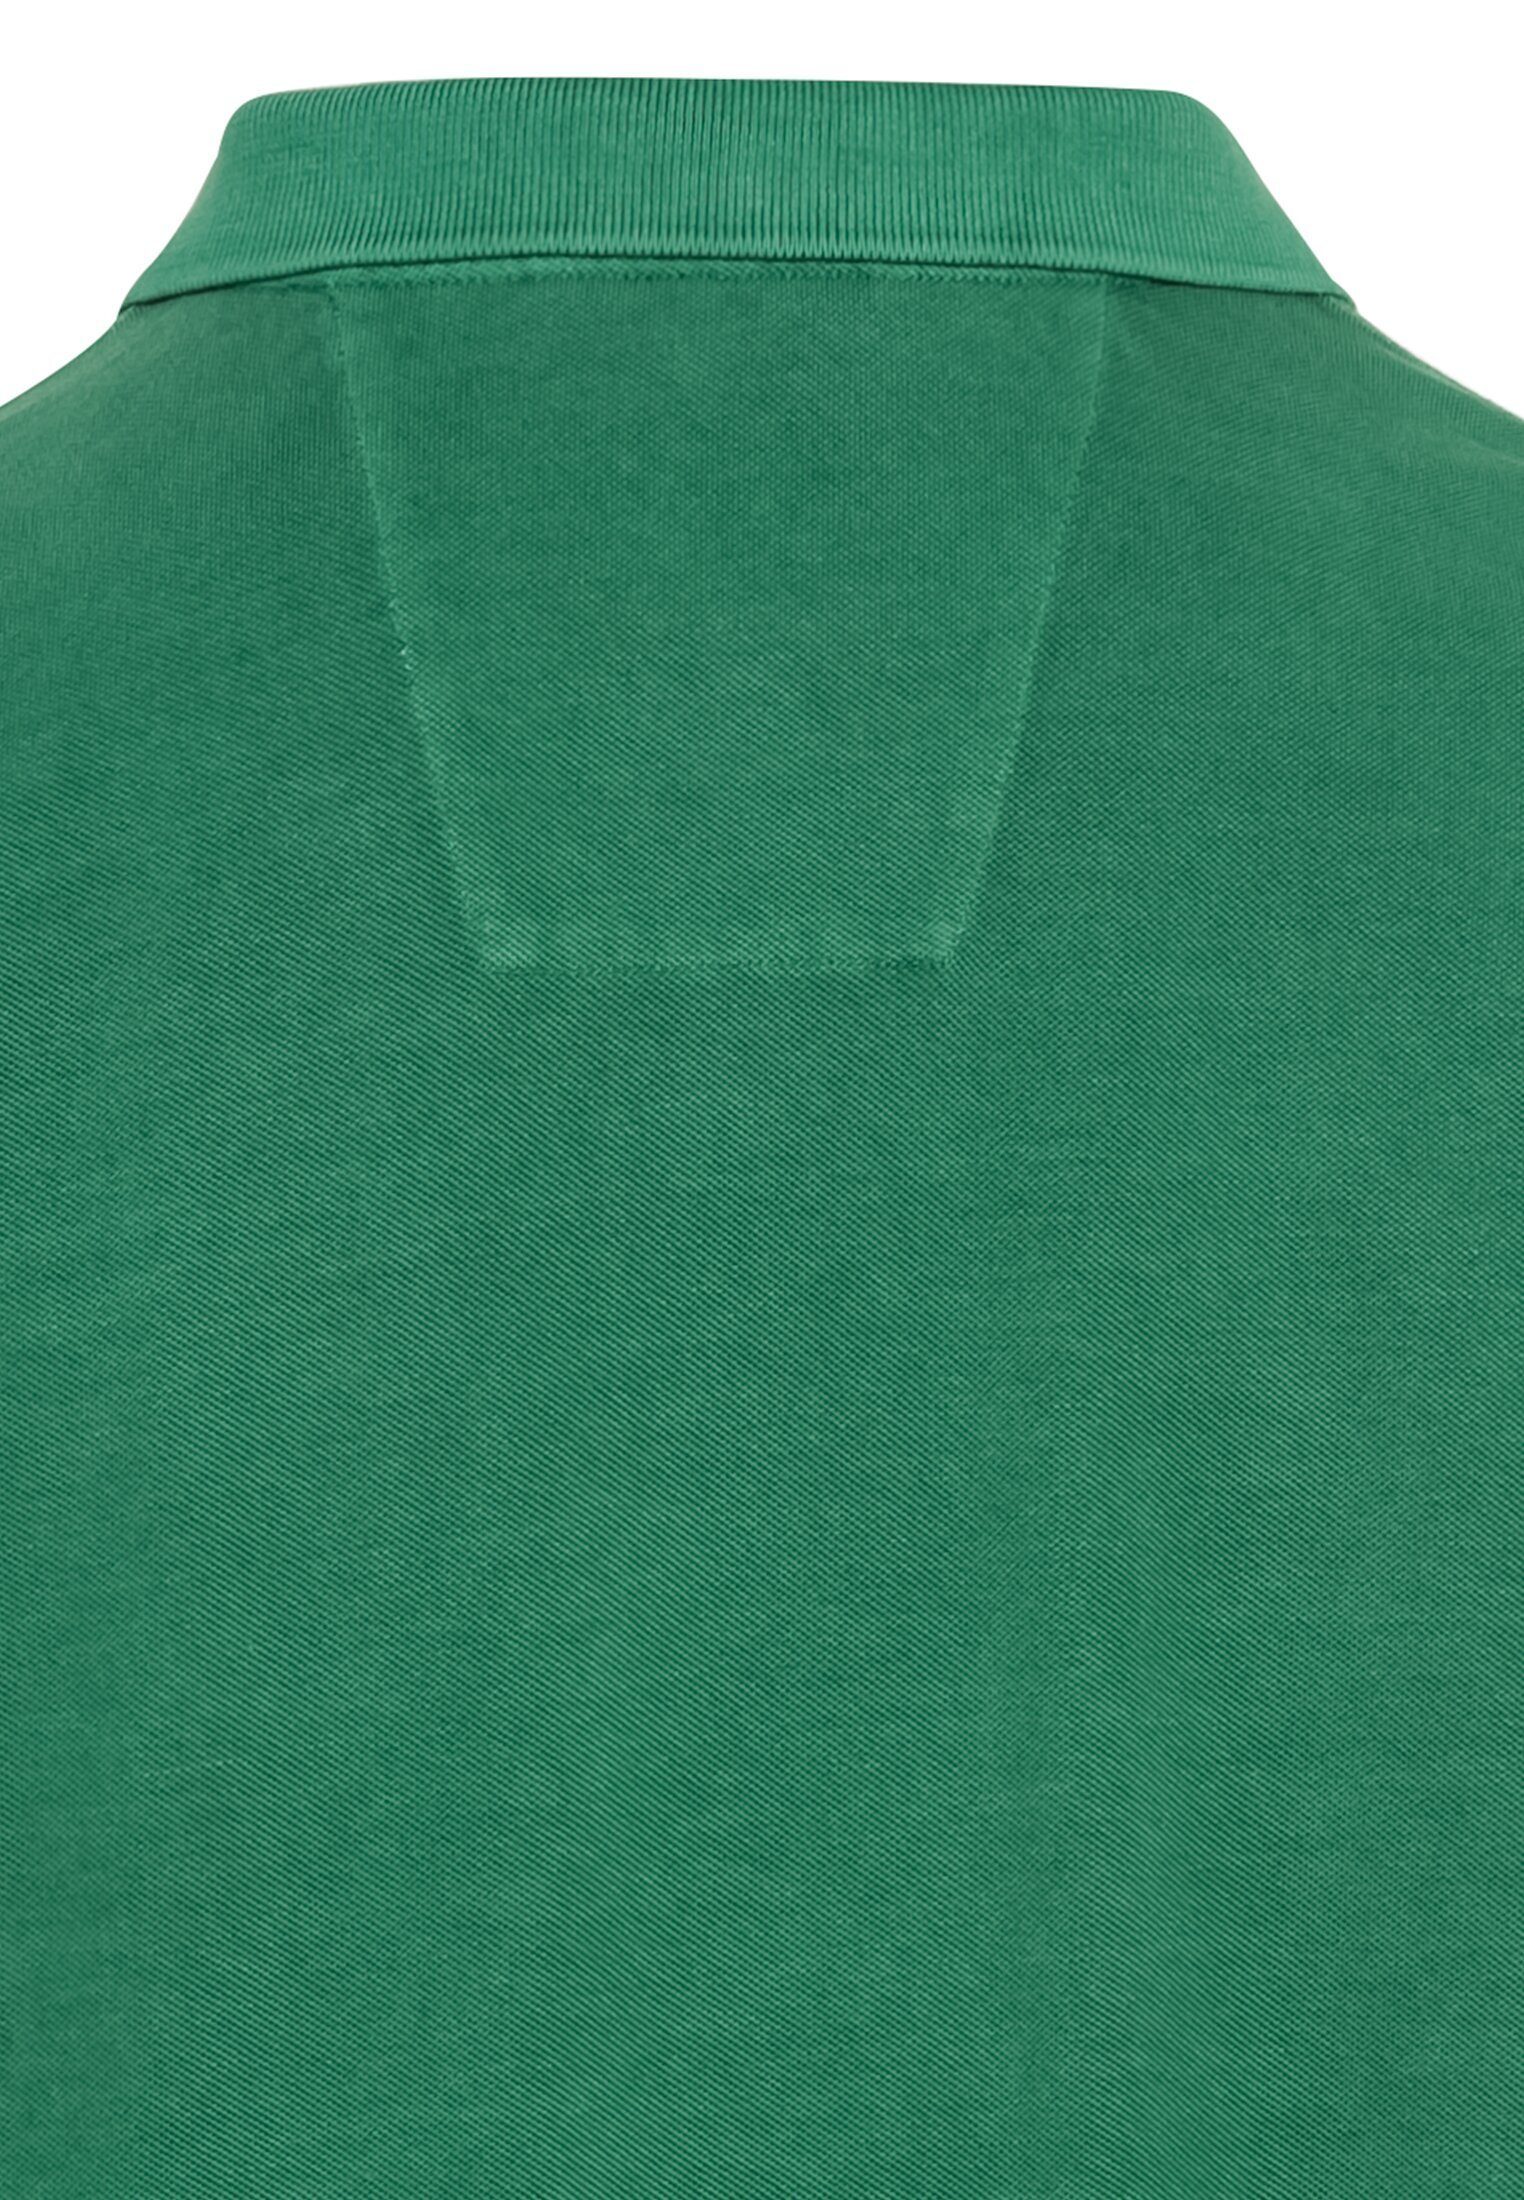 Baumwolle active Shirts_Poloshirt Grün aus camel Poloshirt